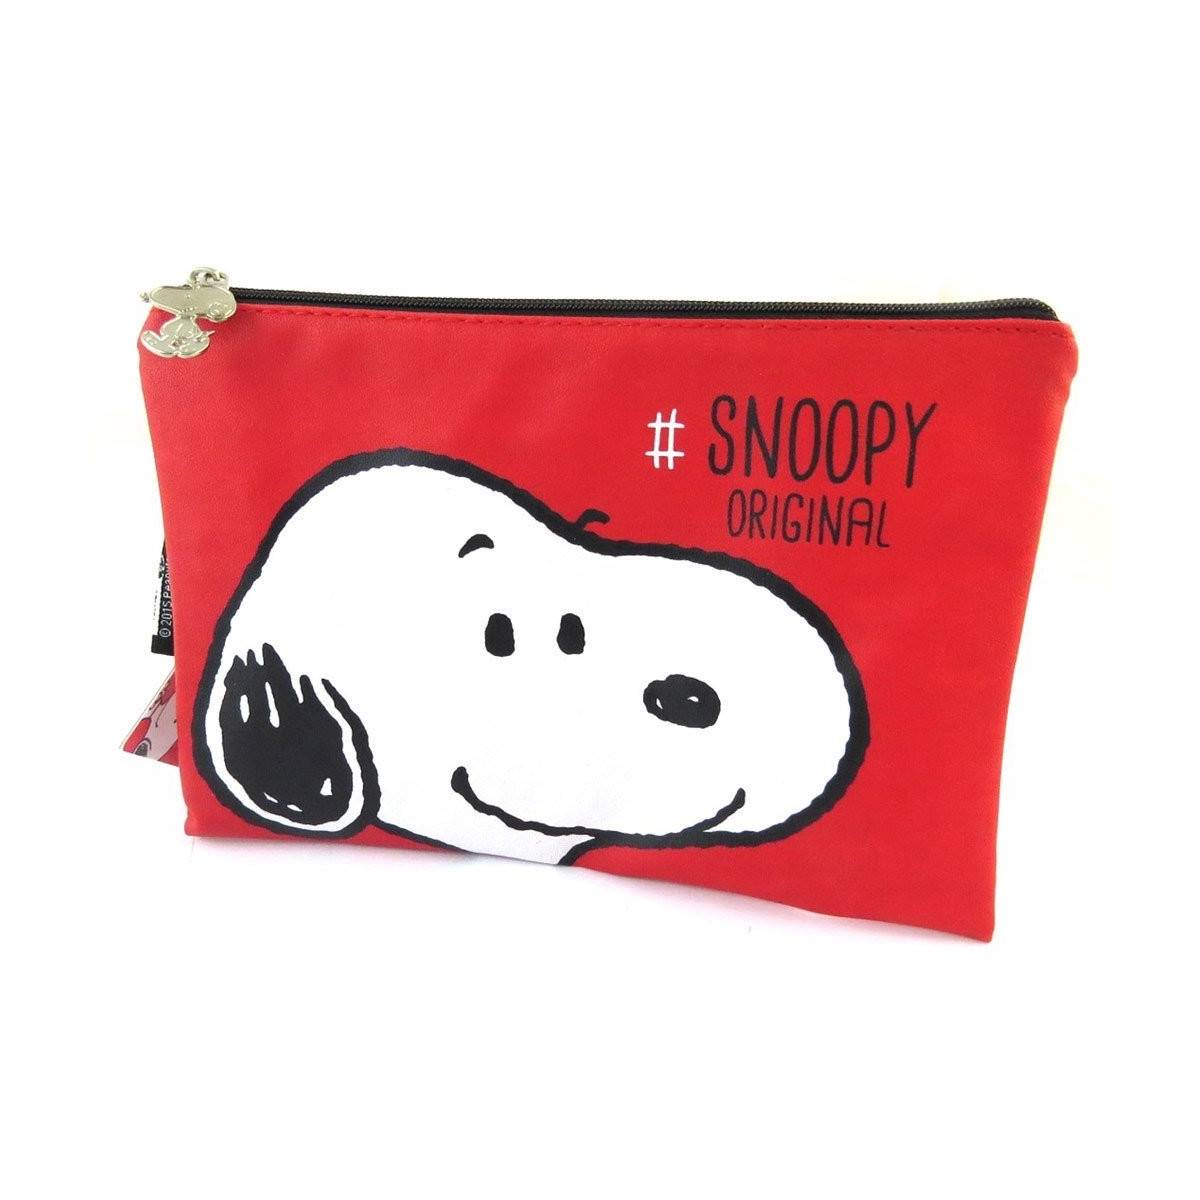 Snoopy|Trousse plate Snoopy Original 19 x 13.5 cm